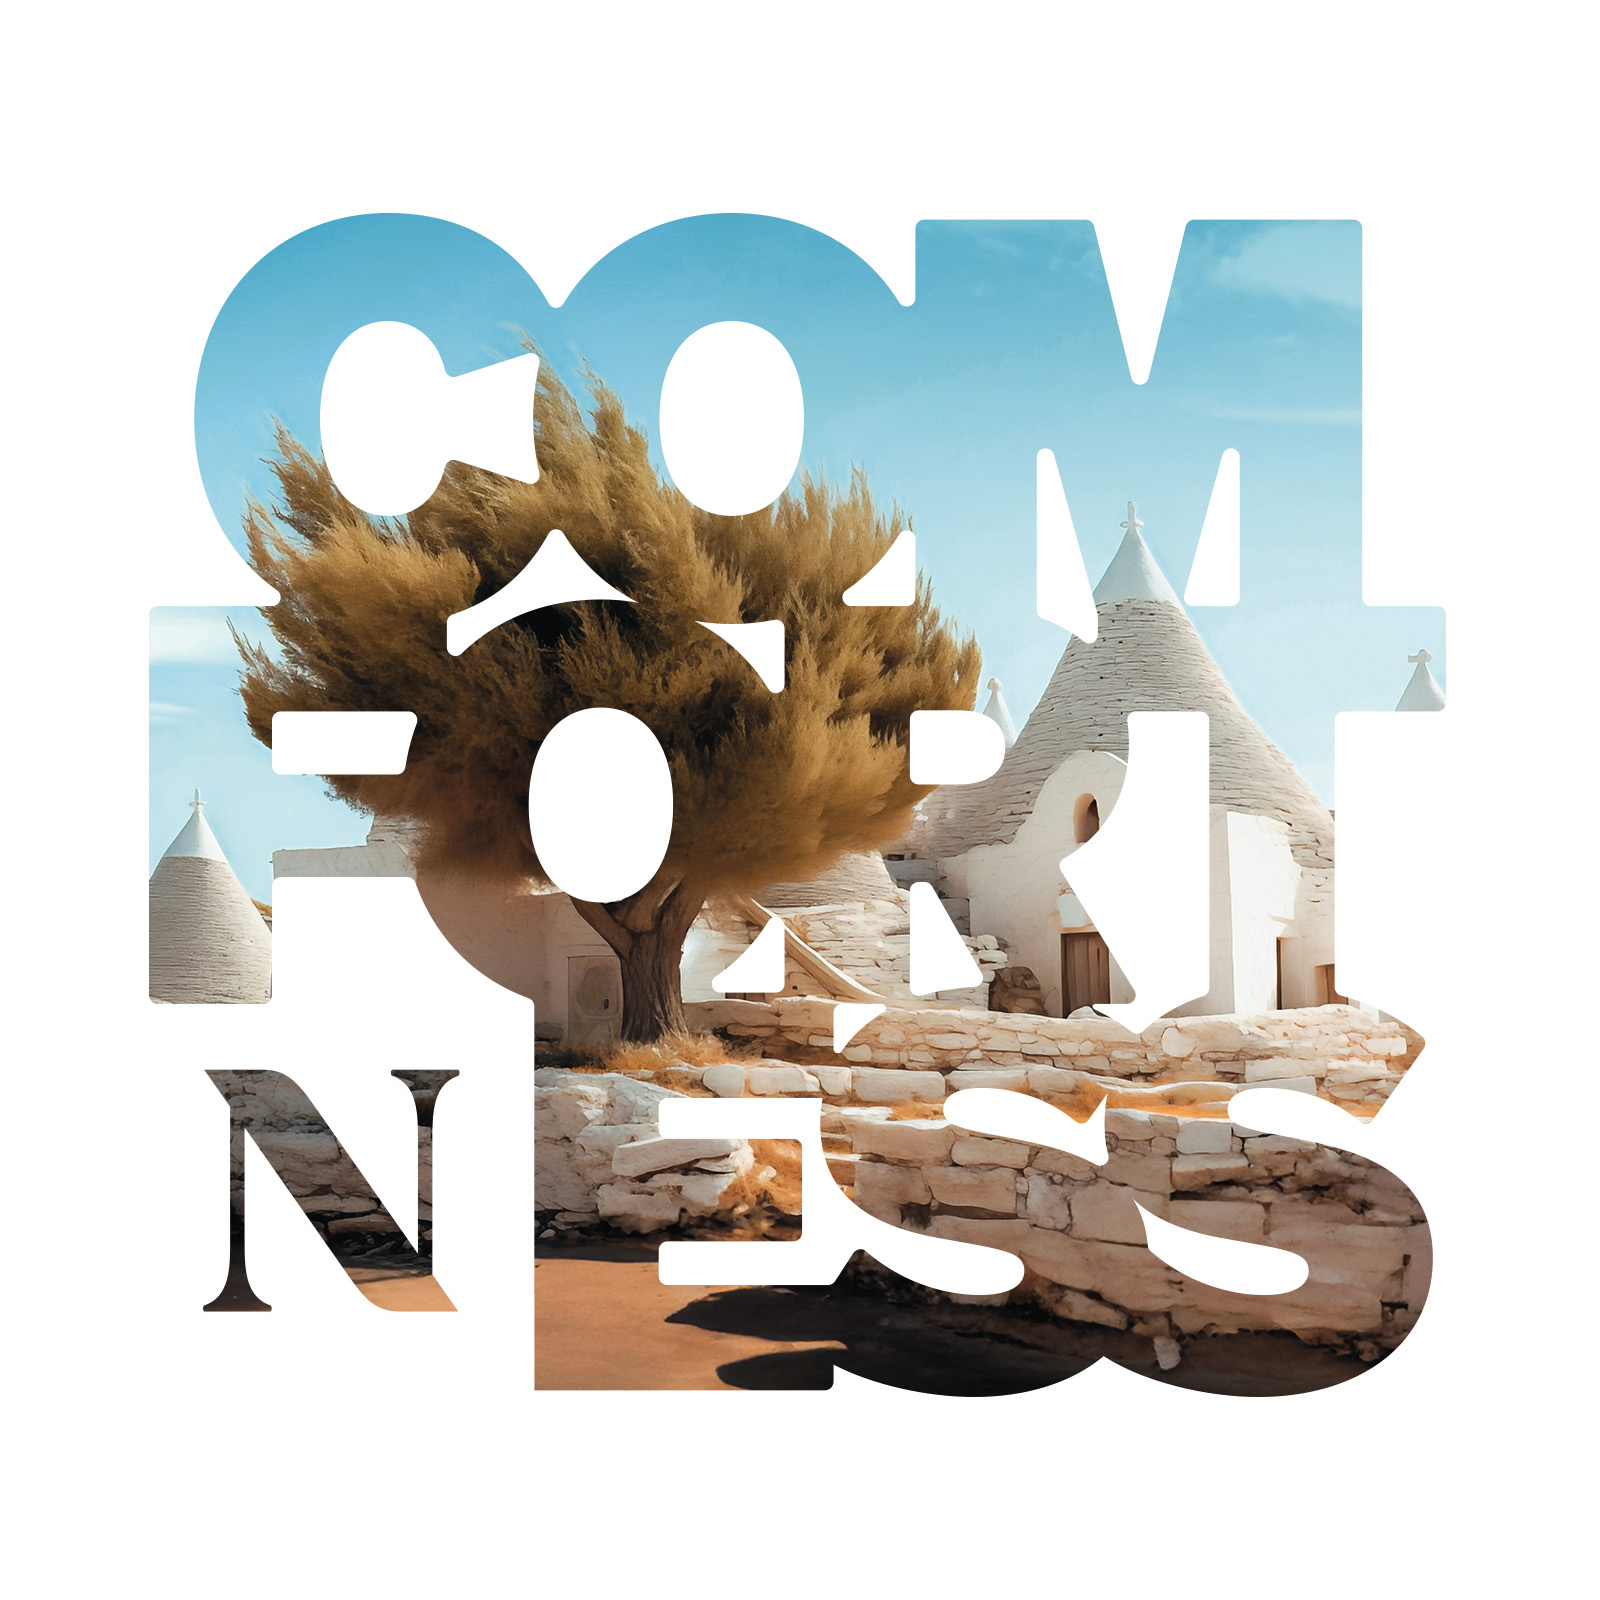 Natuzzi editorial - Comfortness & Wellness